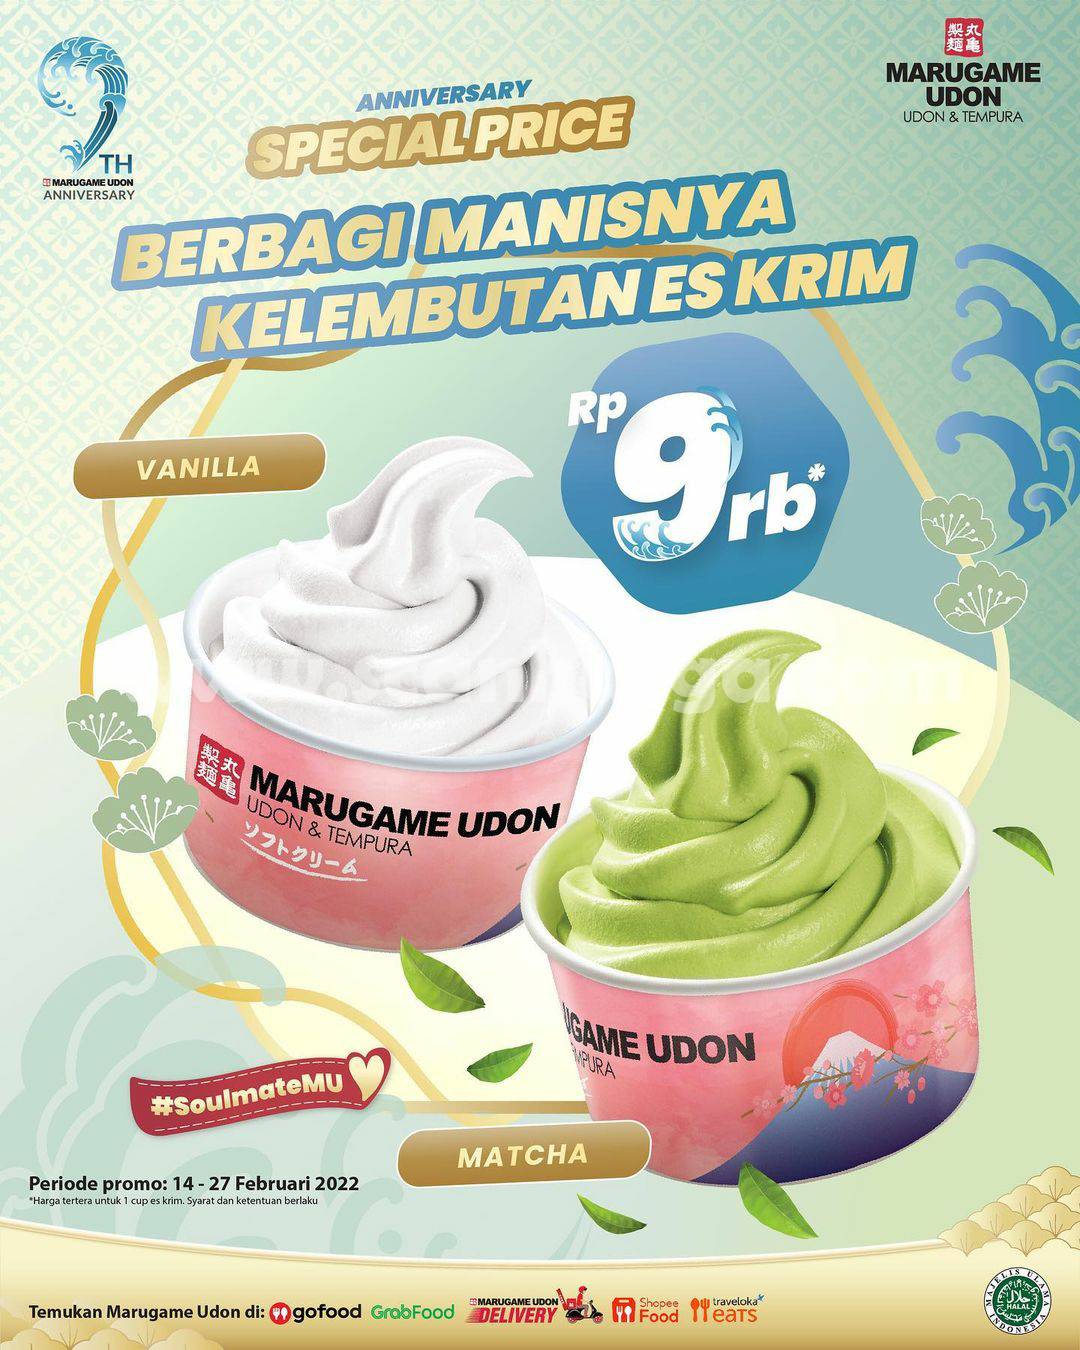 Promo MARUGAME UDON 9th Anniversary - Harga Spesial Ice Cream Hanya Rp. 9RB